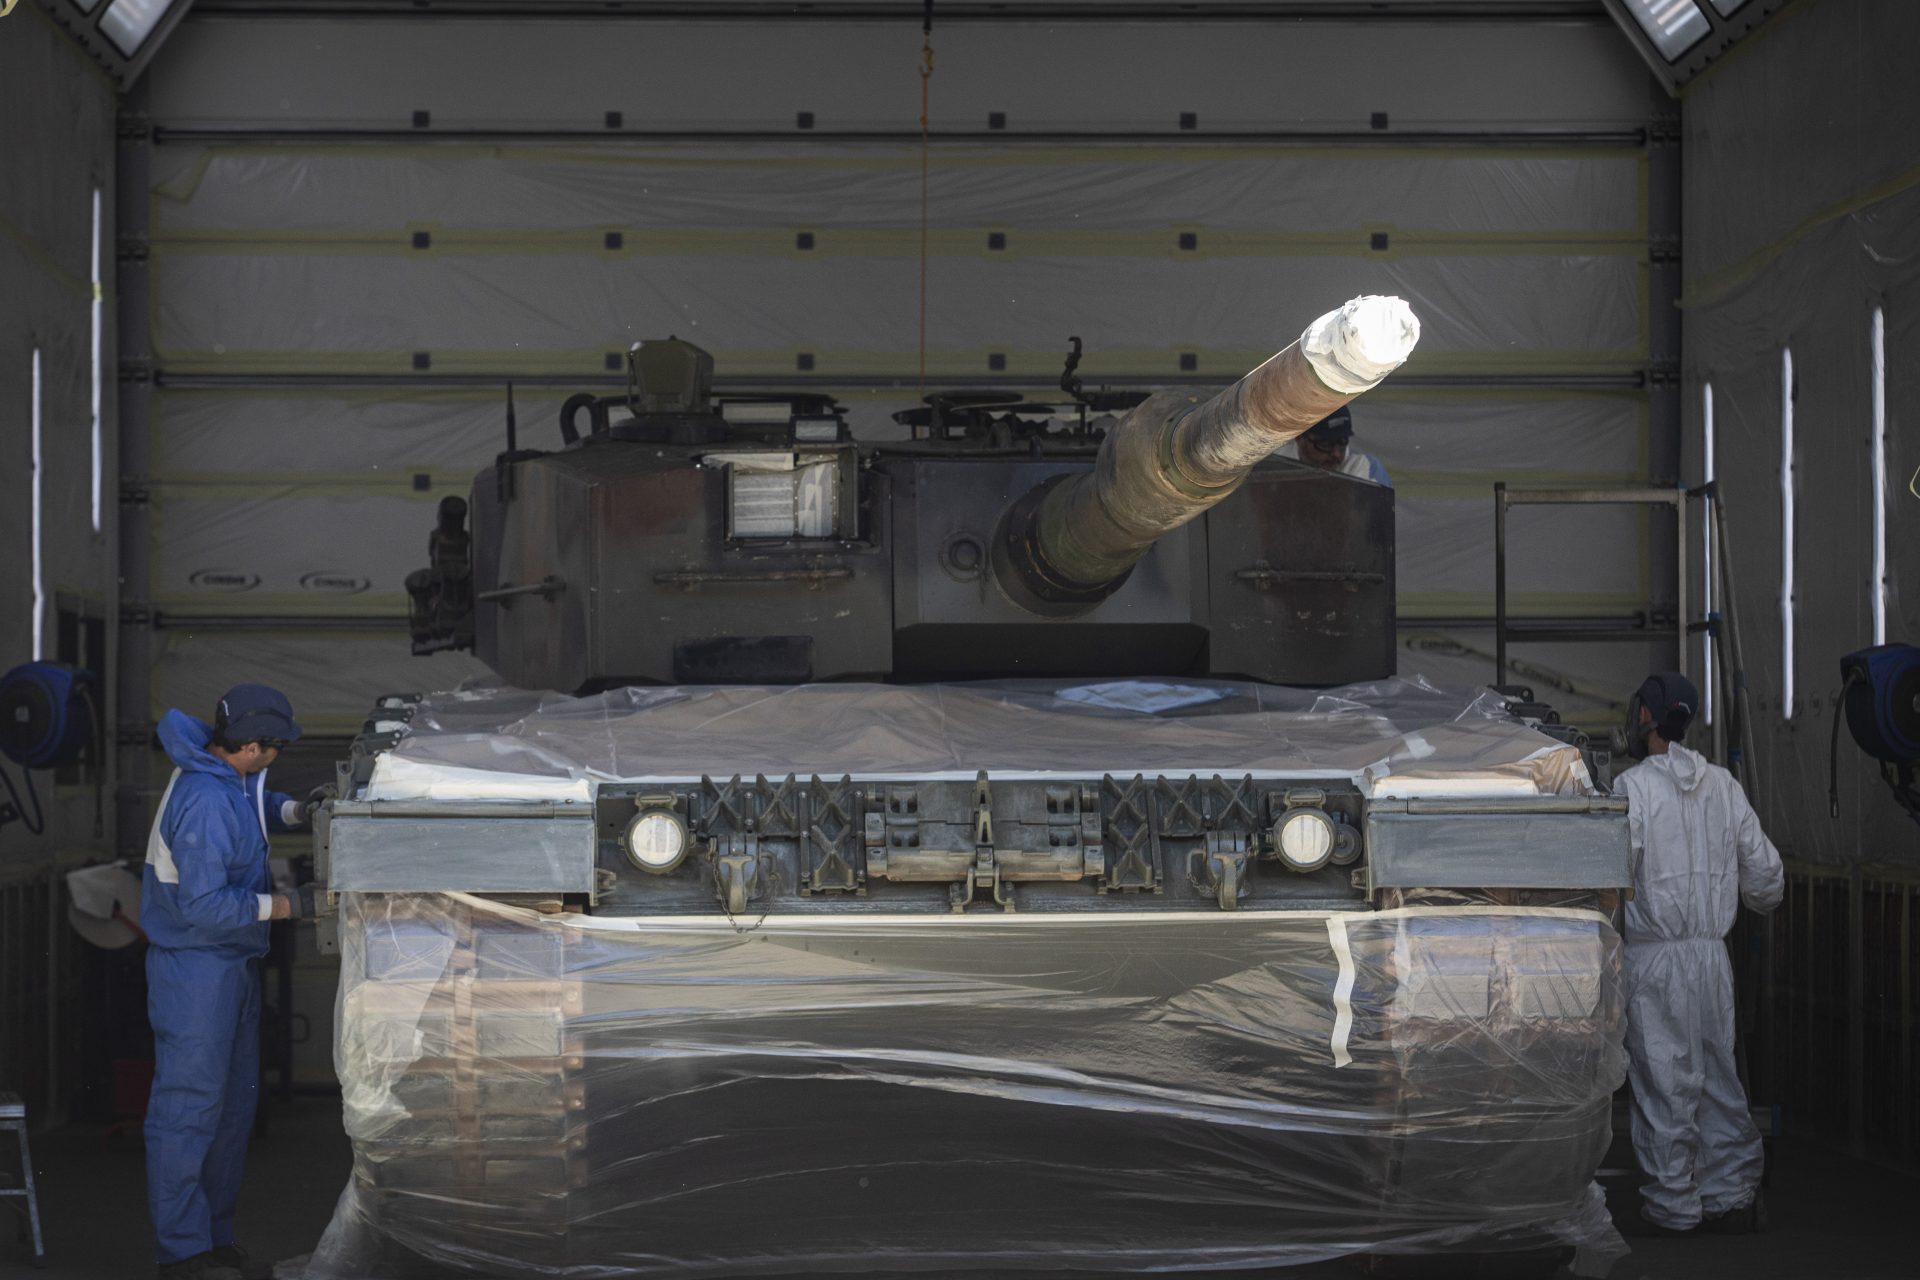 The Leopard 2A4 is no longer active